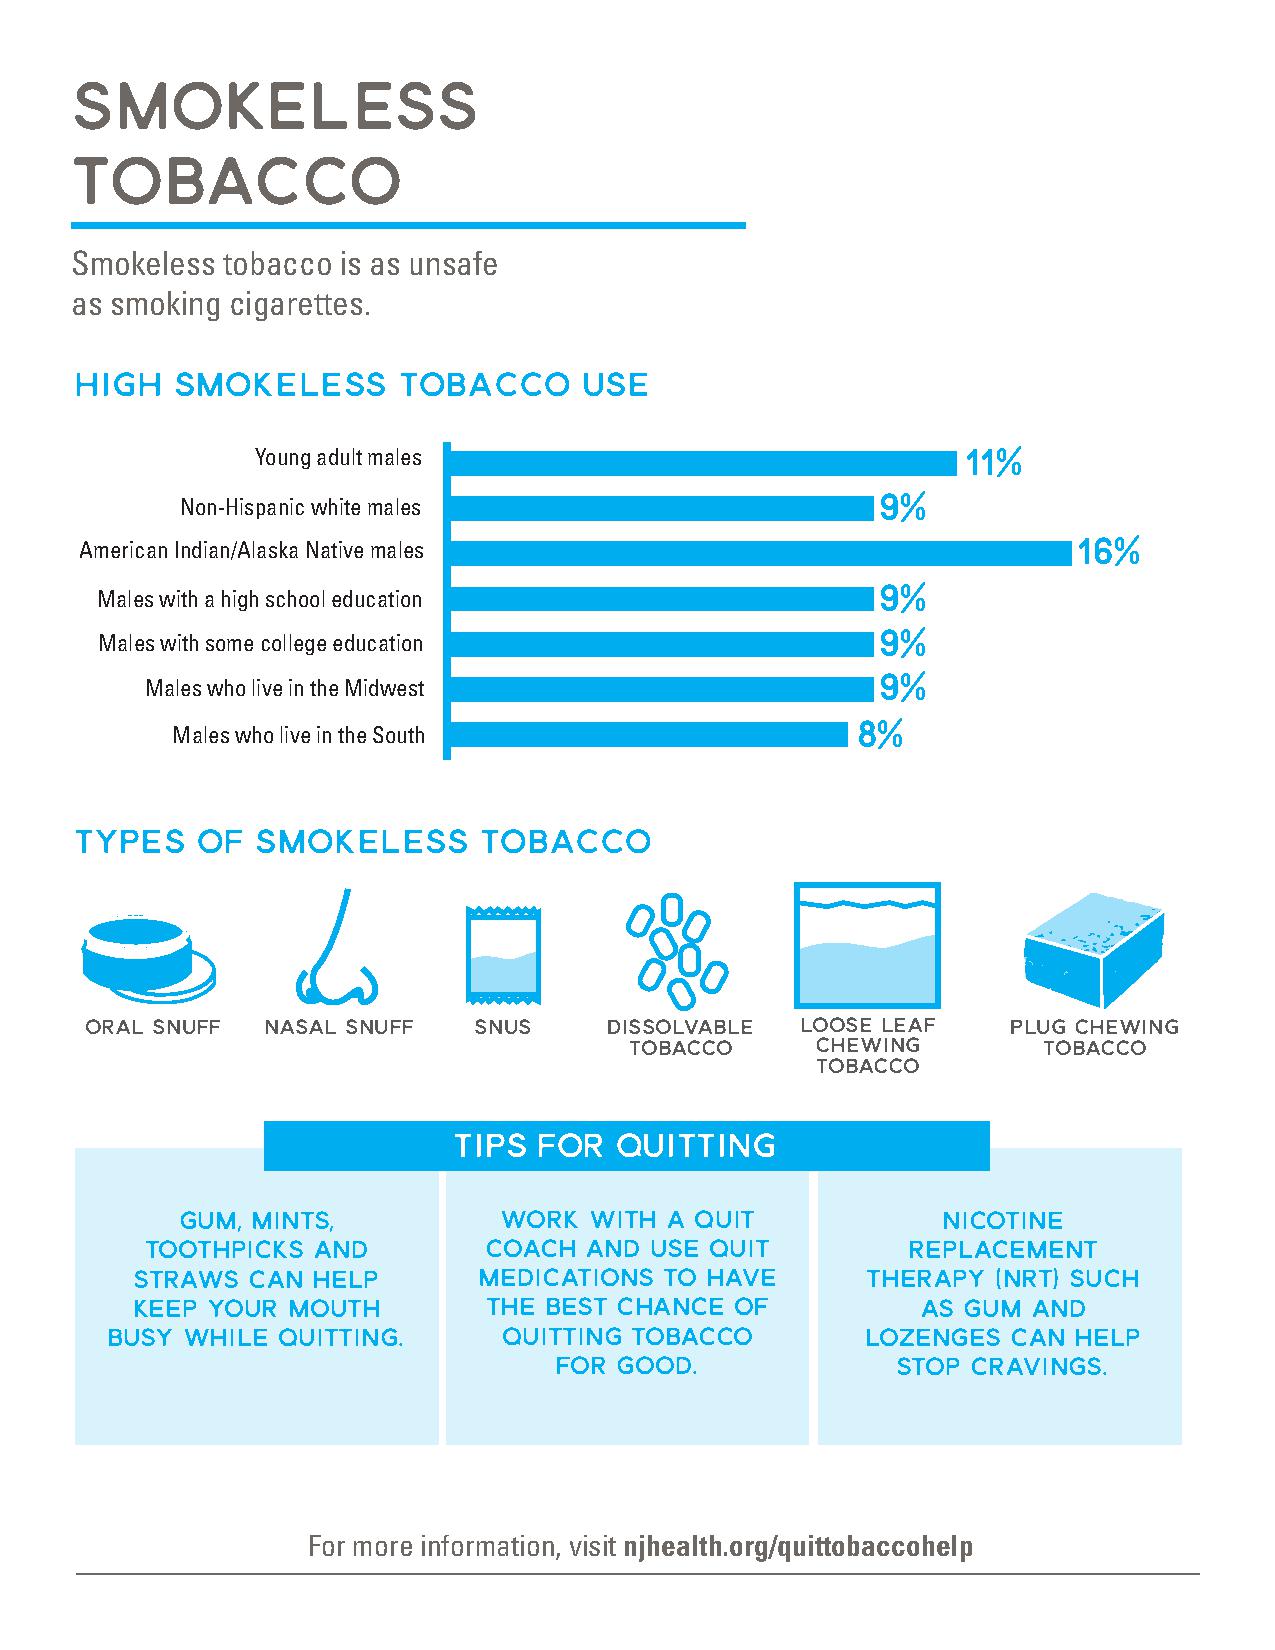 Smokeless Tobacco use concerns